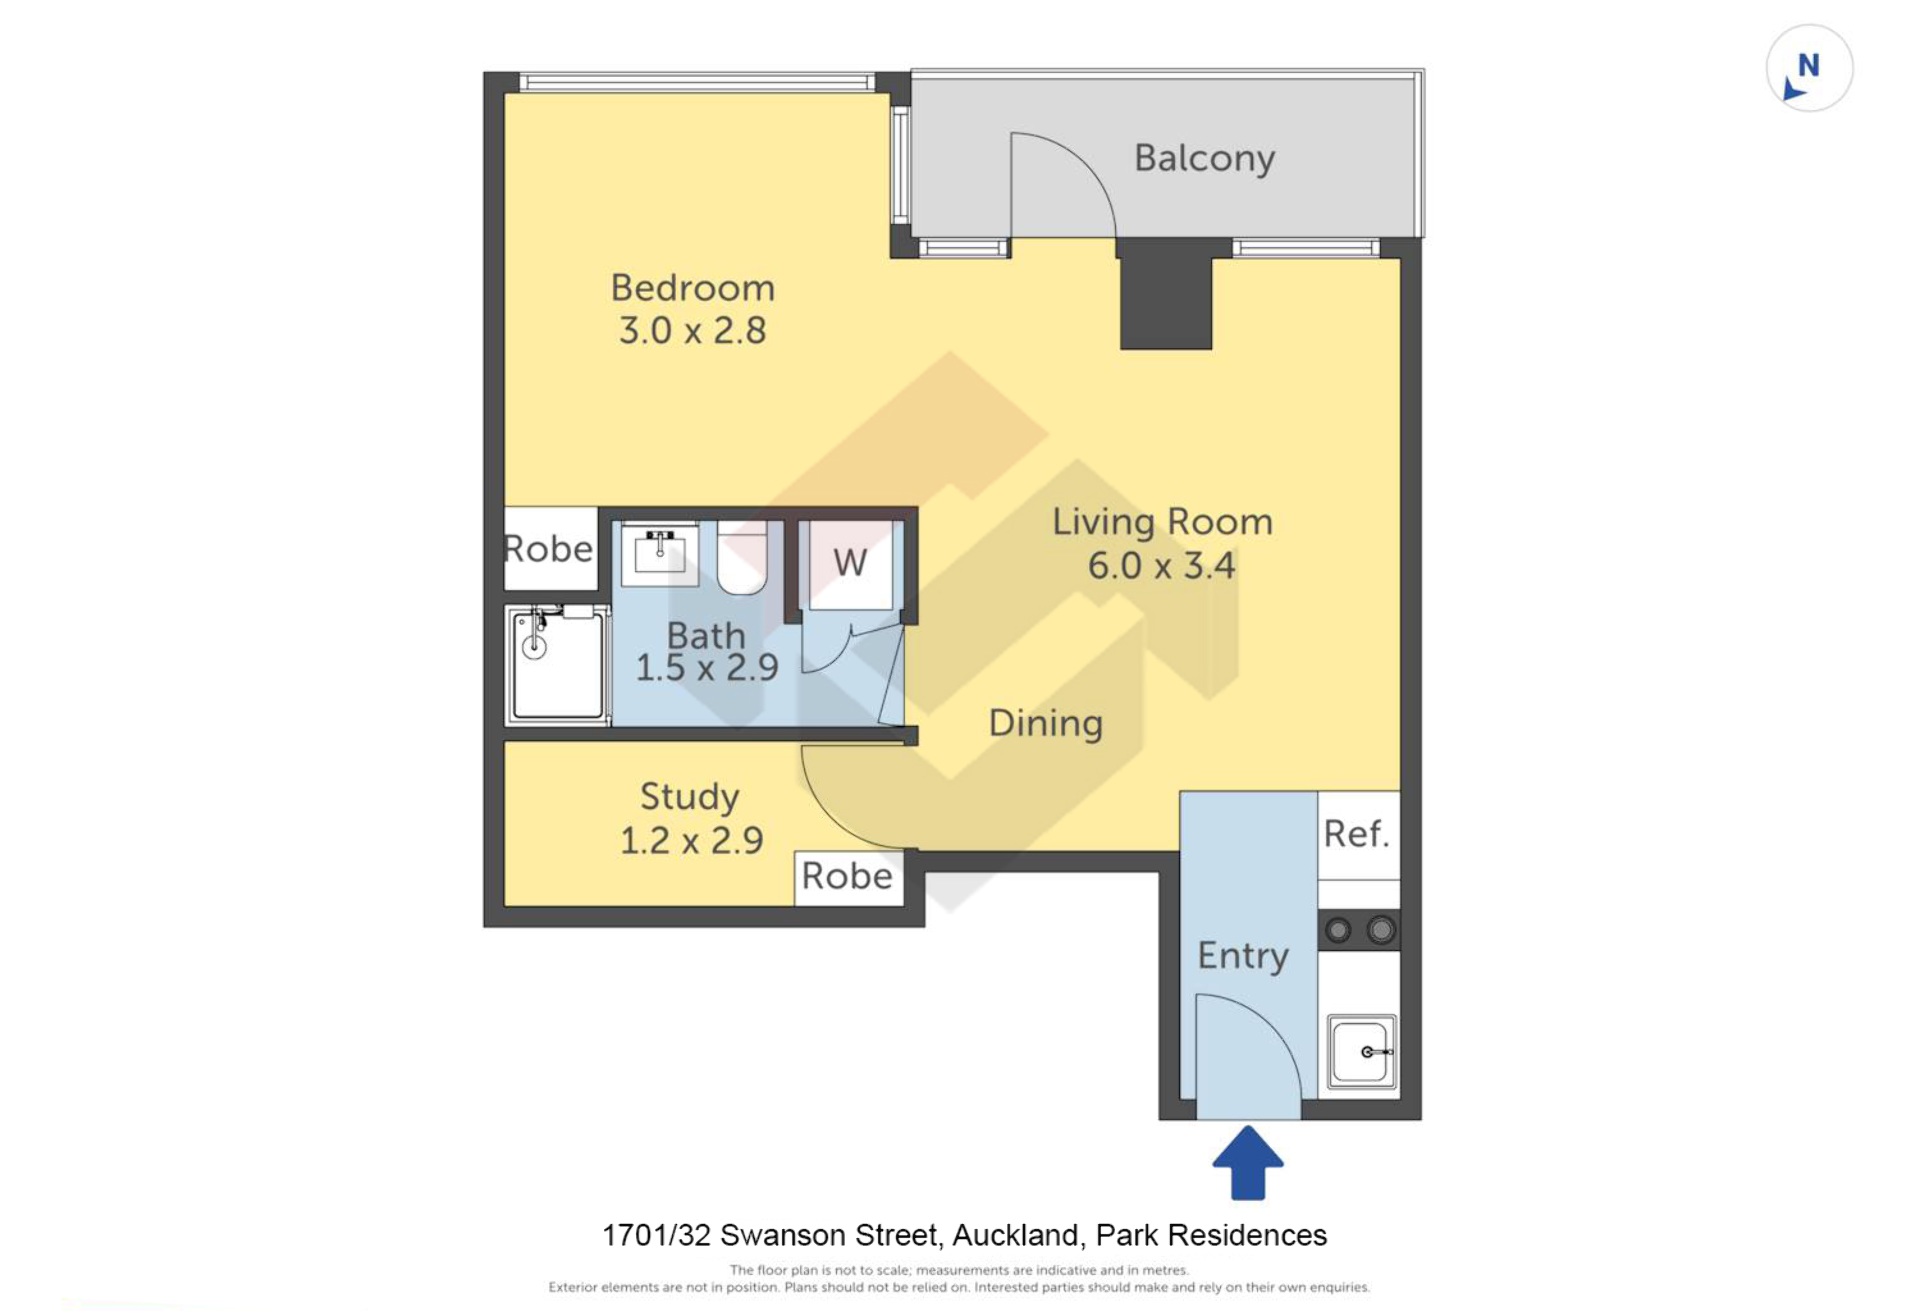 Floorplan | 32 Swanson Street, City Centre | Apartment Specialists